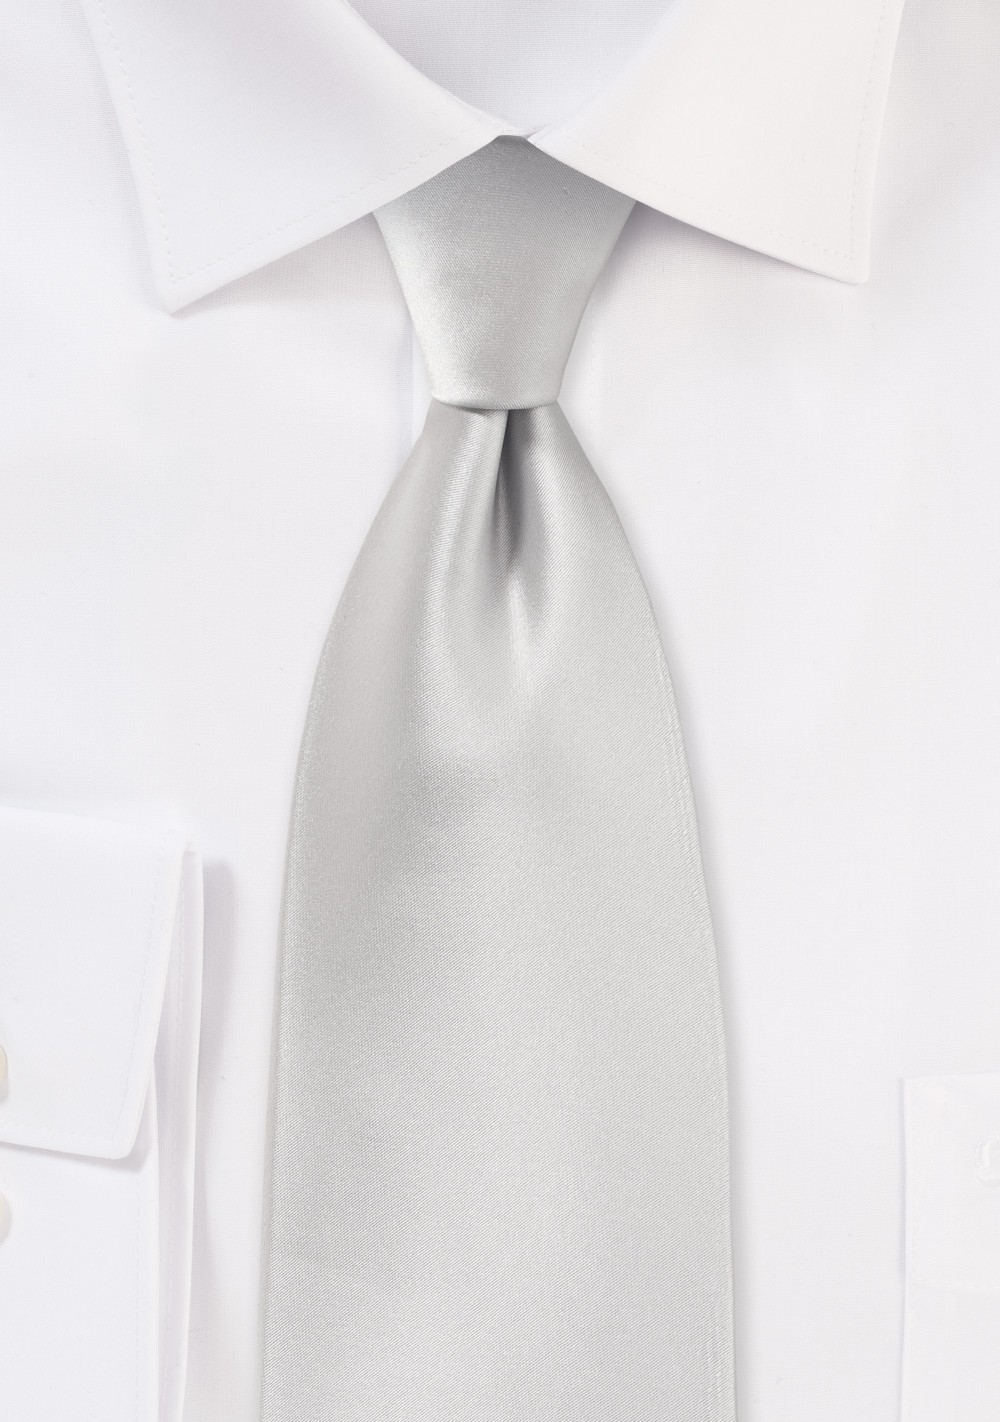 Light Platinum Silver Tie Made for Kids